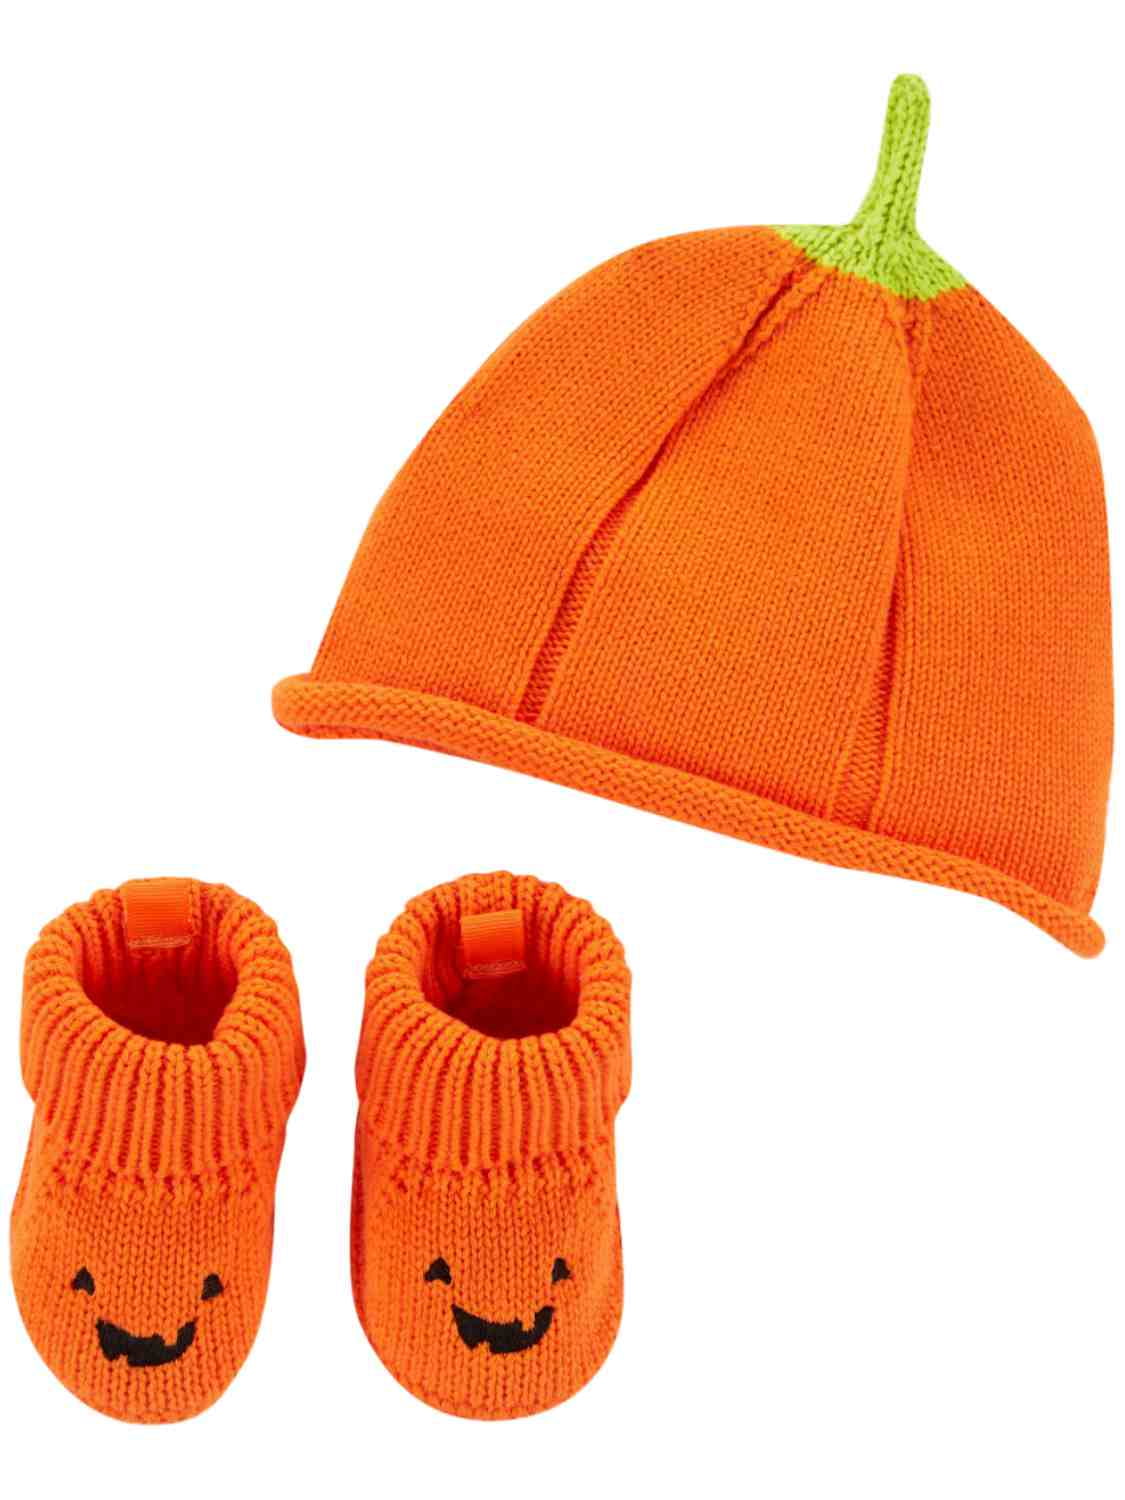 Carter's Just One You Pumpkin Hat Booties Halloween Orange Jack O Lantern NWT 